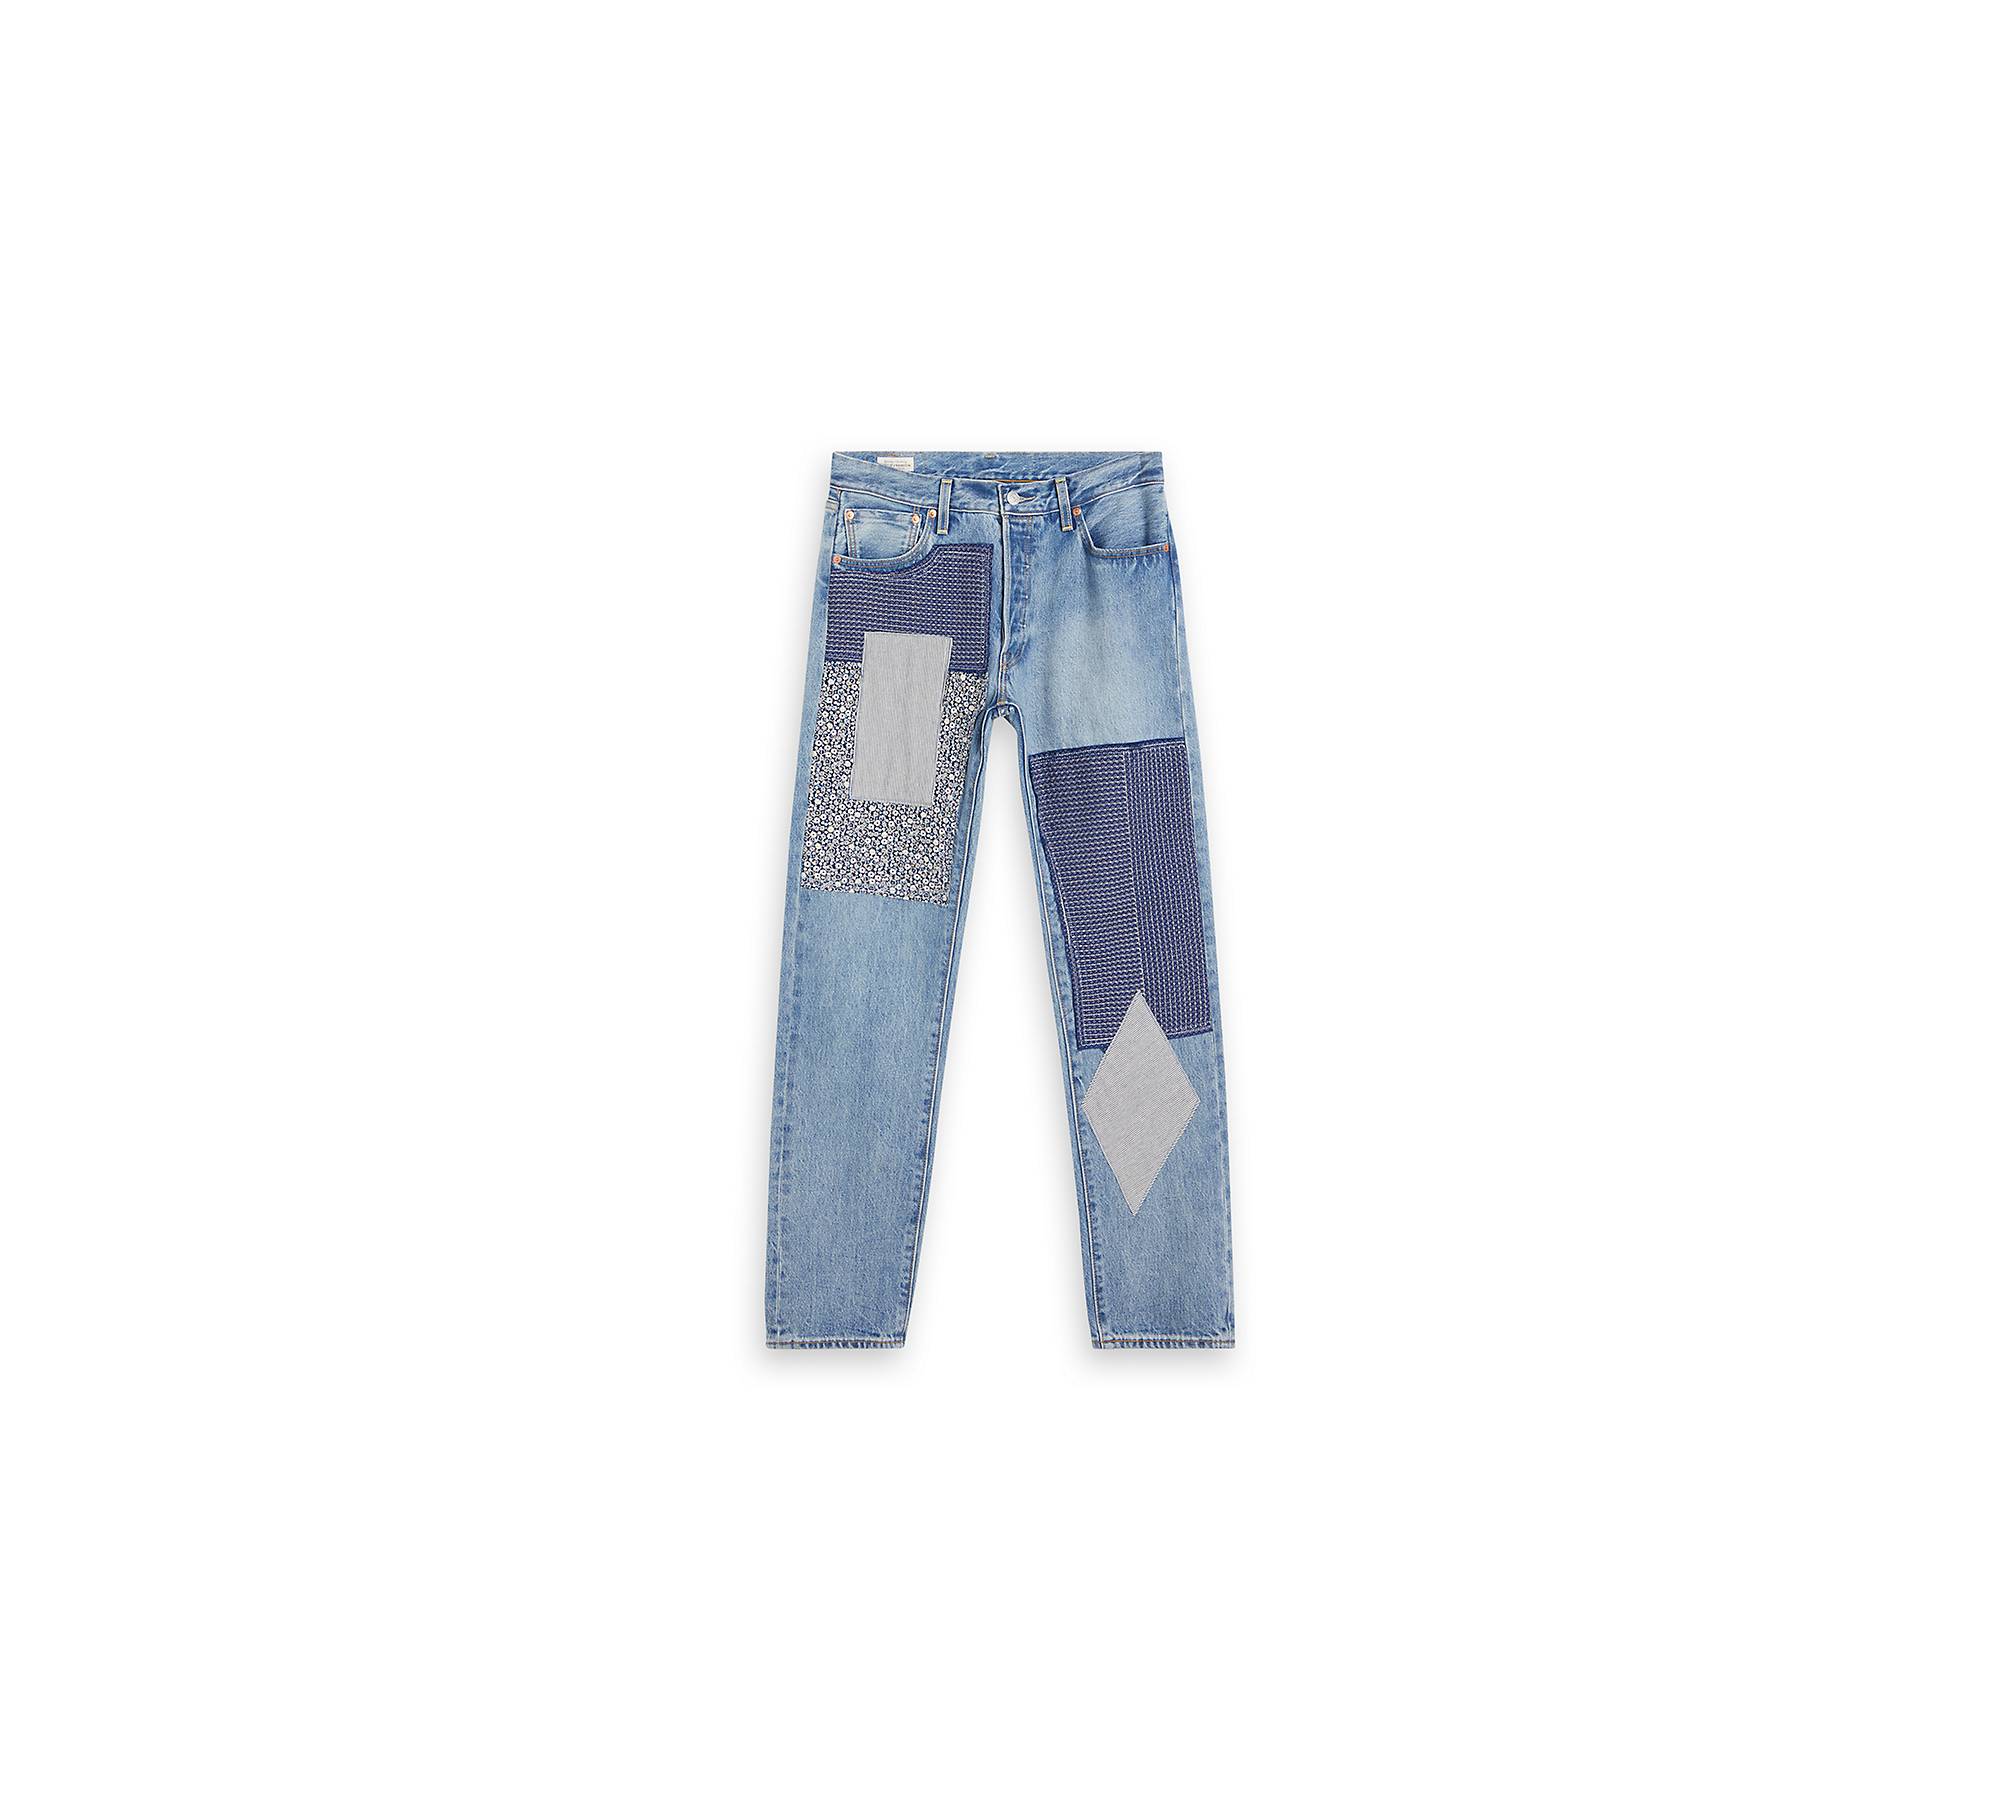 Levi's 501 '54 Original Fit Jean - Size 36/32